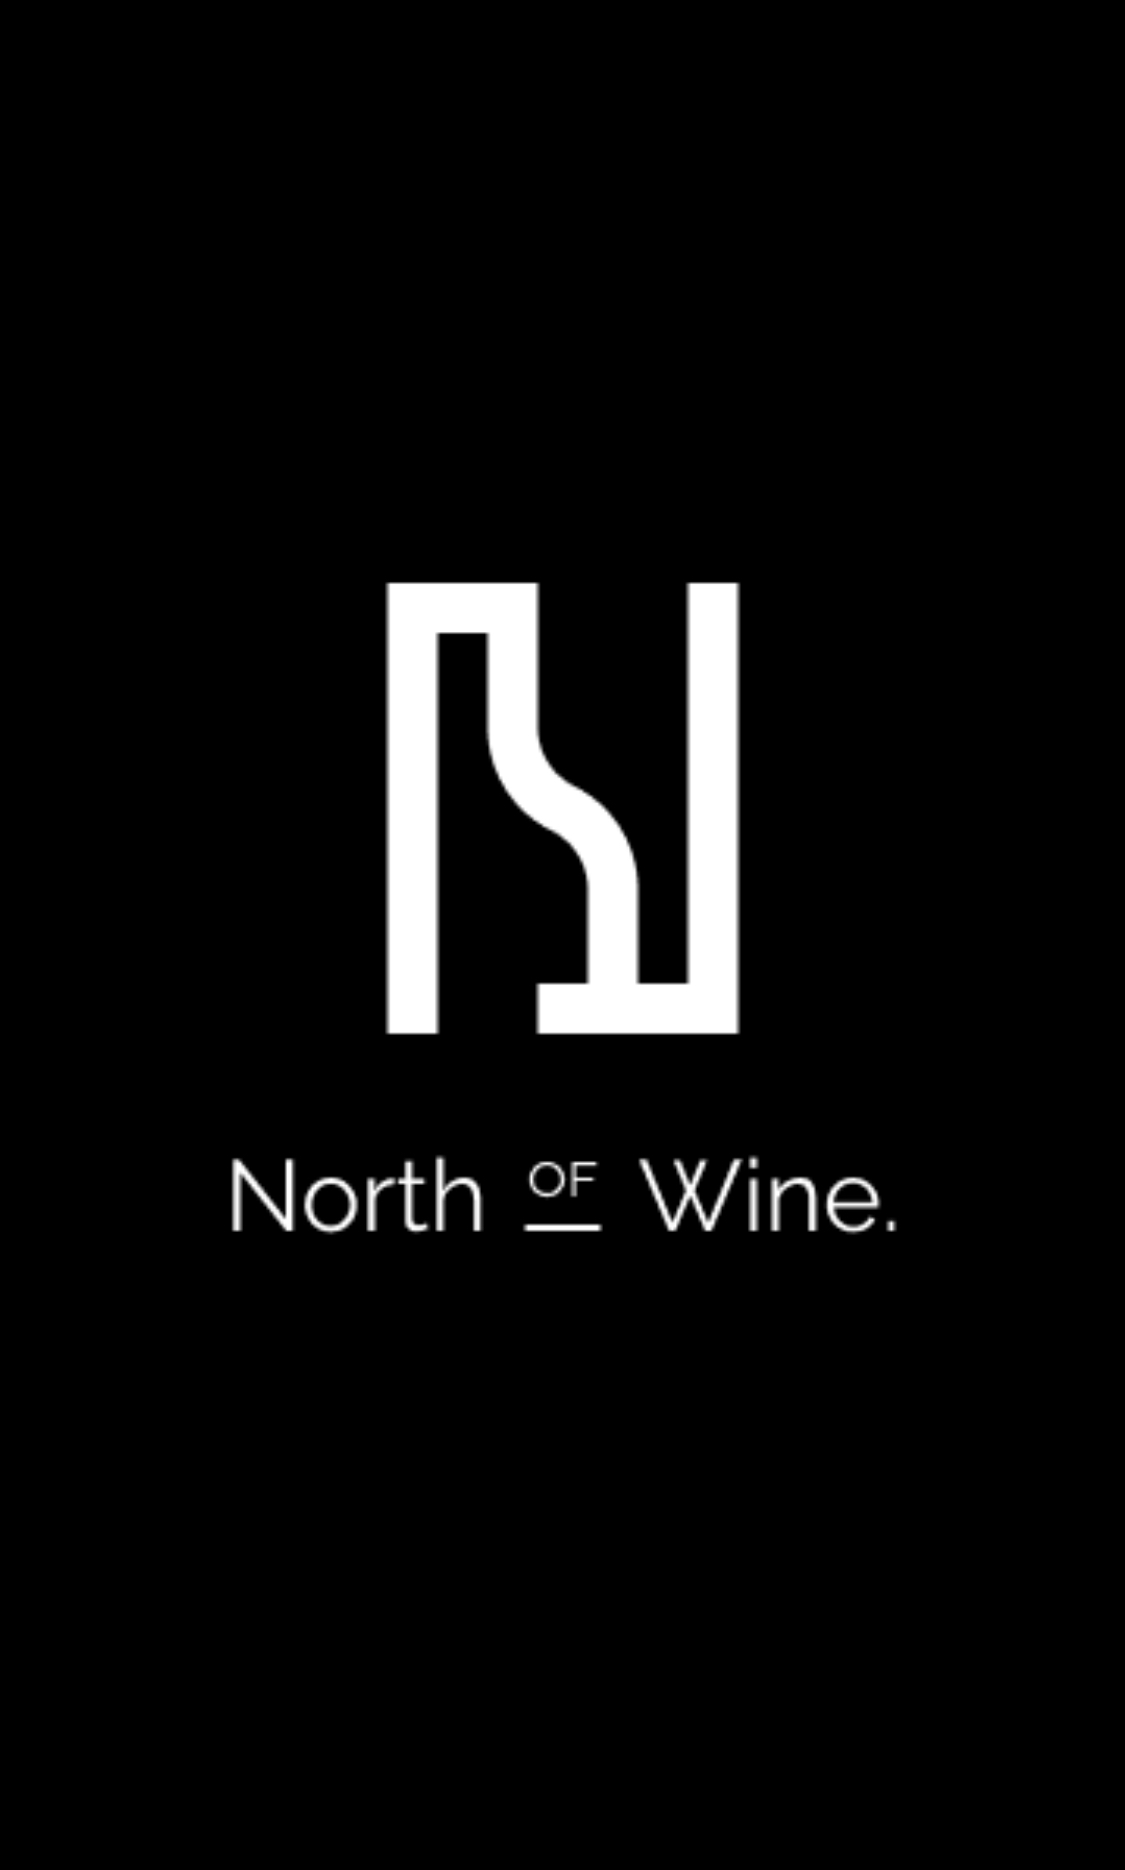 North of wine